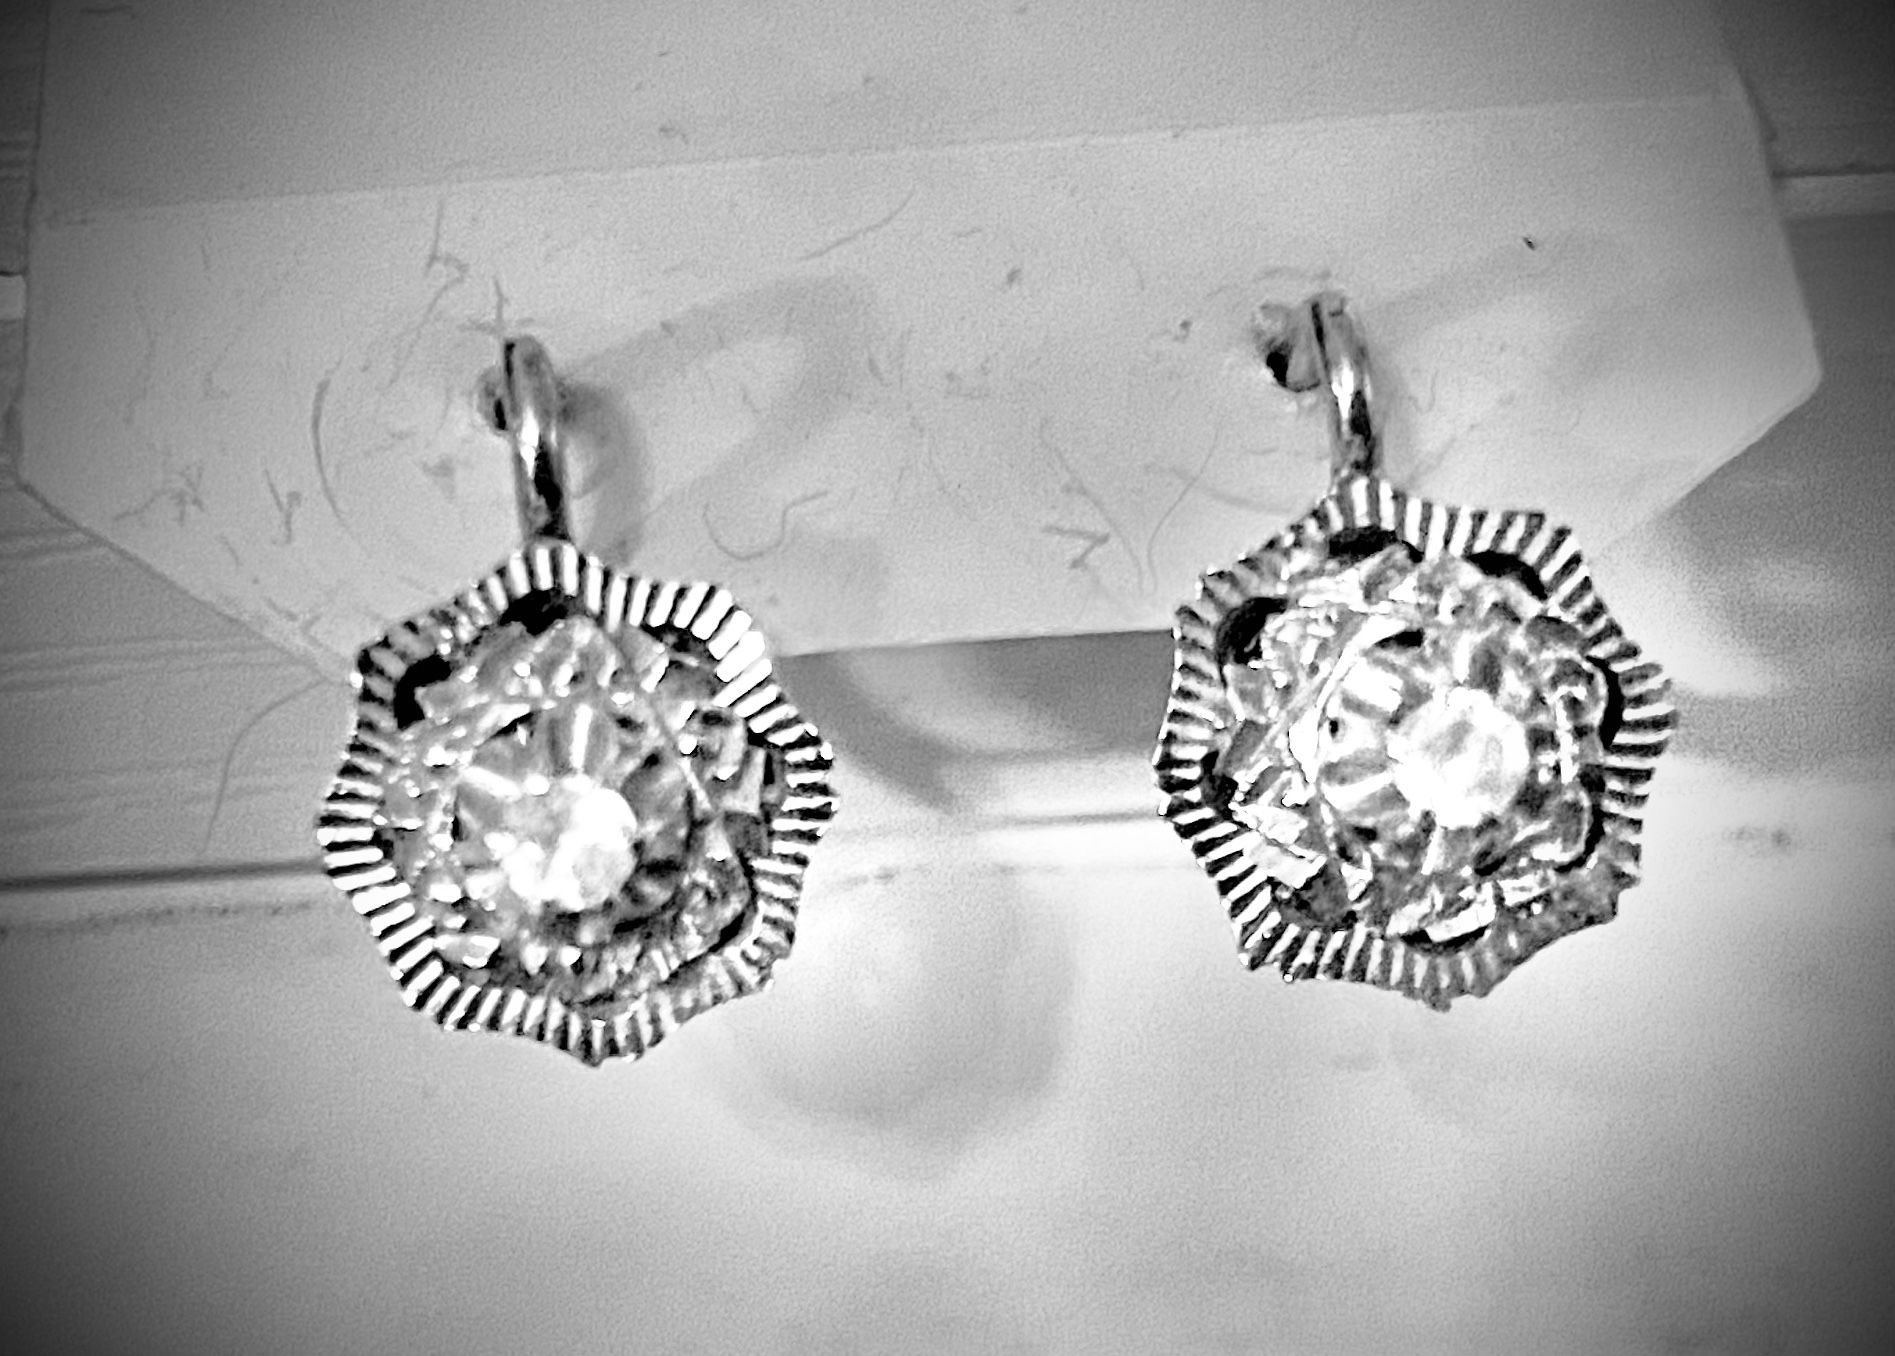 Vintage Silver Cubic Drop Earrings 